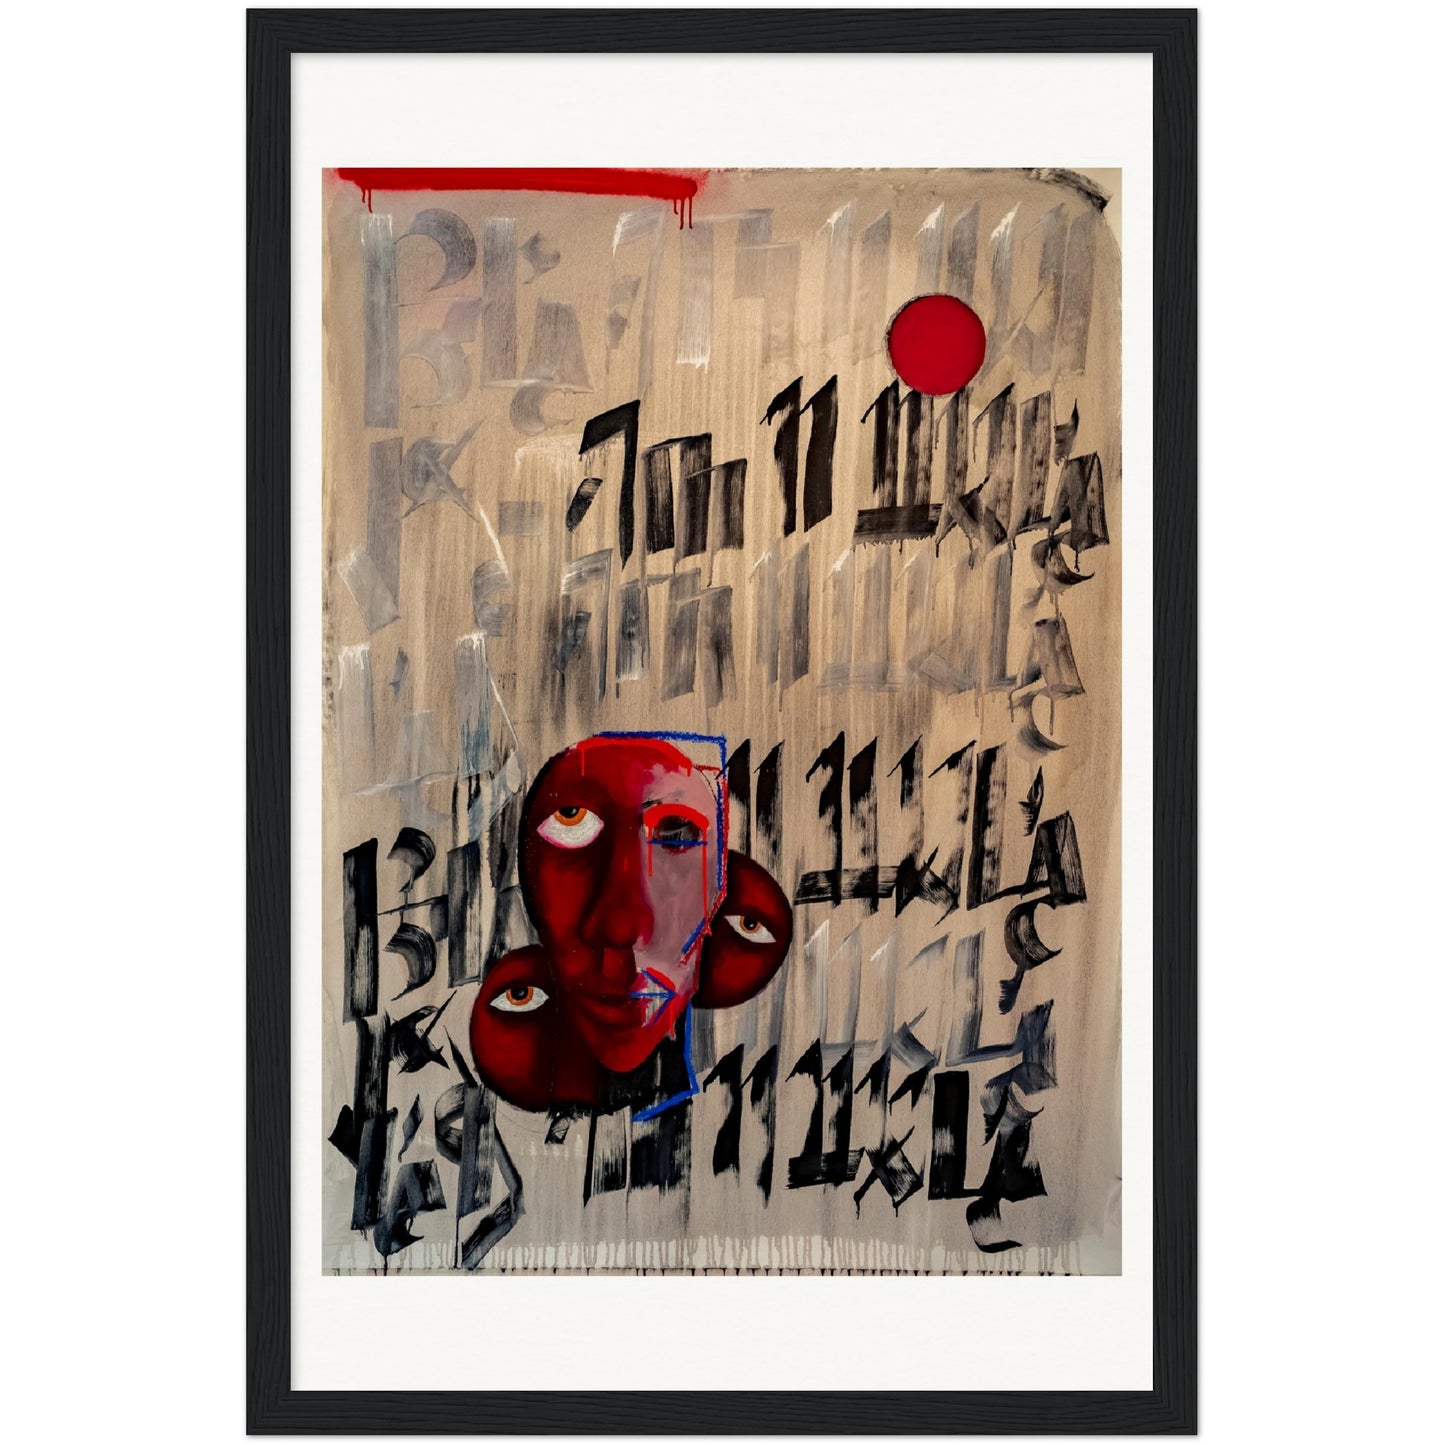 BELOVED AM I THE (Museum-Quality Matte Paper Wooden Framed Poster)